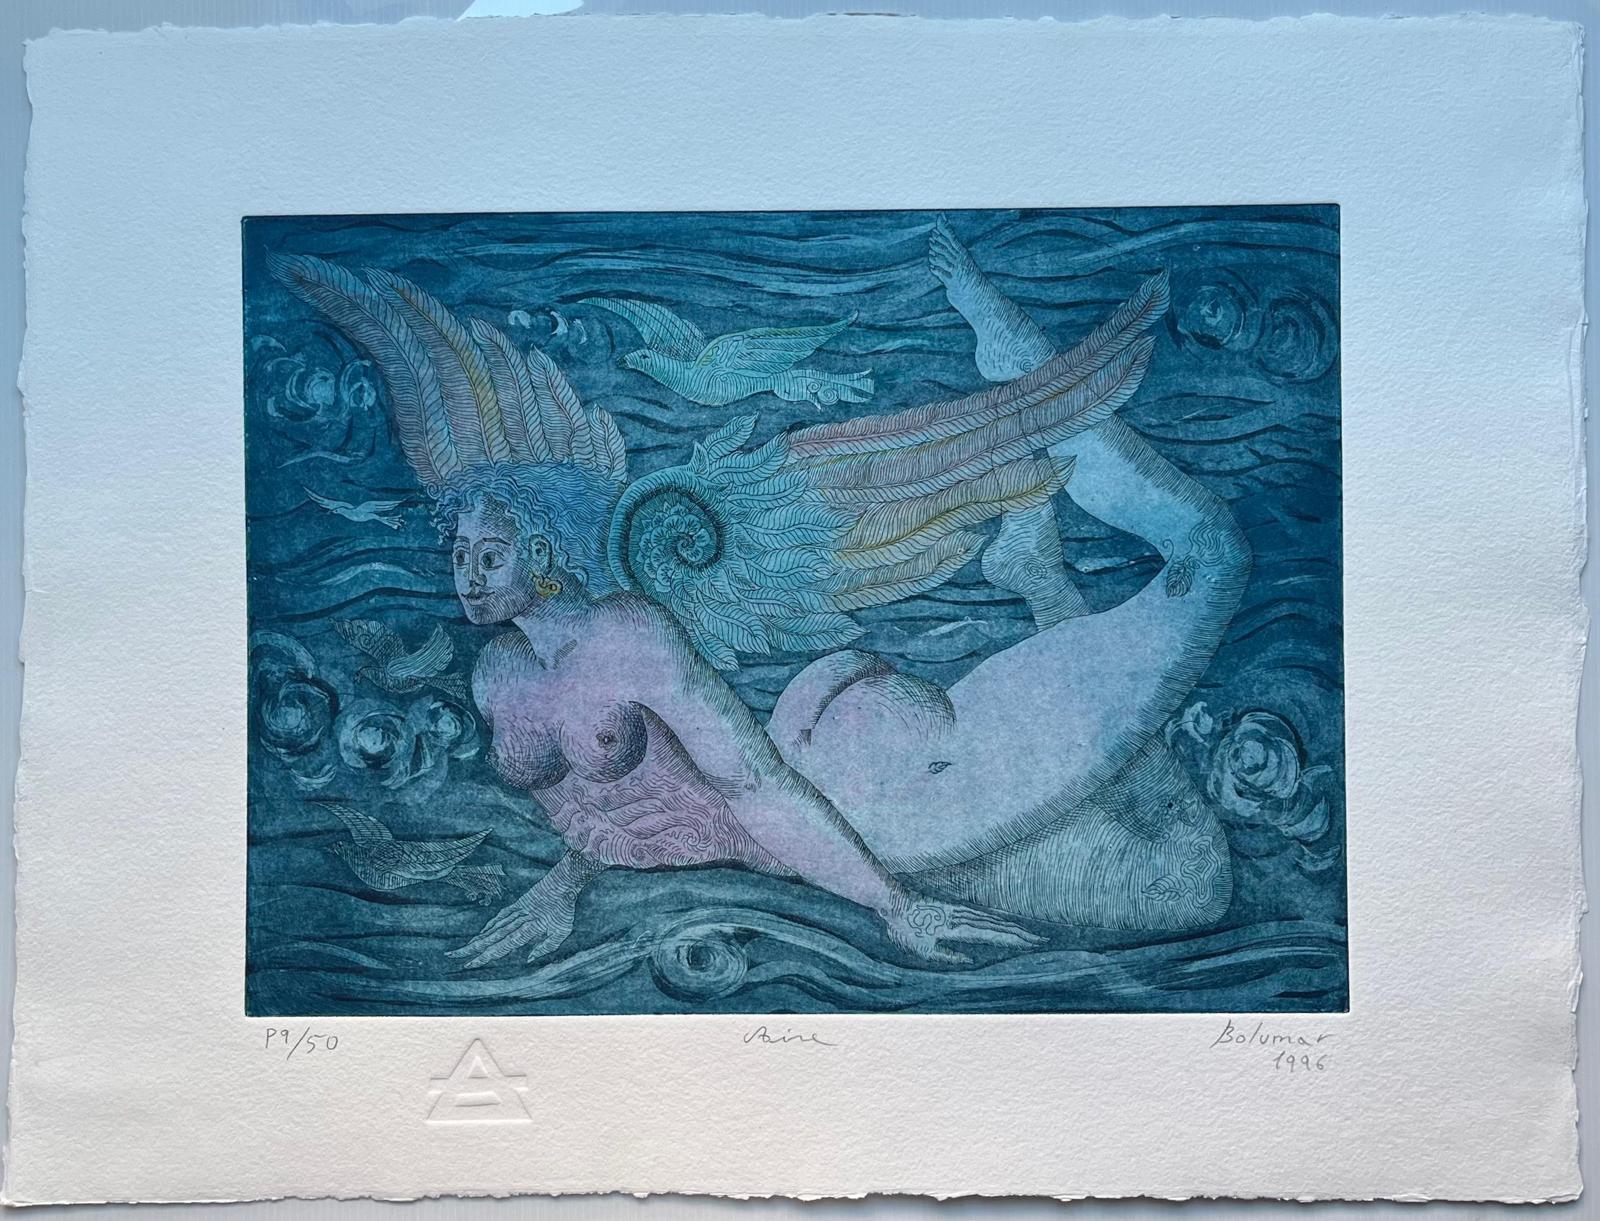 Magda Bolumar (Spain, 1936)
'Aire (Carpeta ""Los cuatro elementos"")', 1996
etching, aquatint on paper Rives BFK 300 g.
19.7 x 27.6 in. (50 x 70 cm.)
Edition of 50
Unframed
ID: BOL1268-003-050_1
Hand-signed by